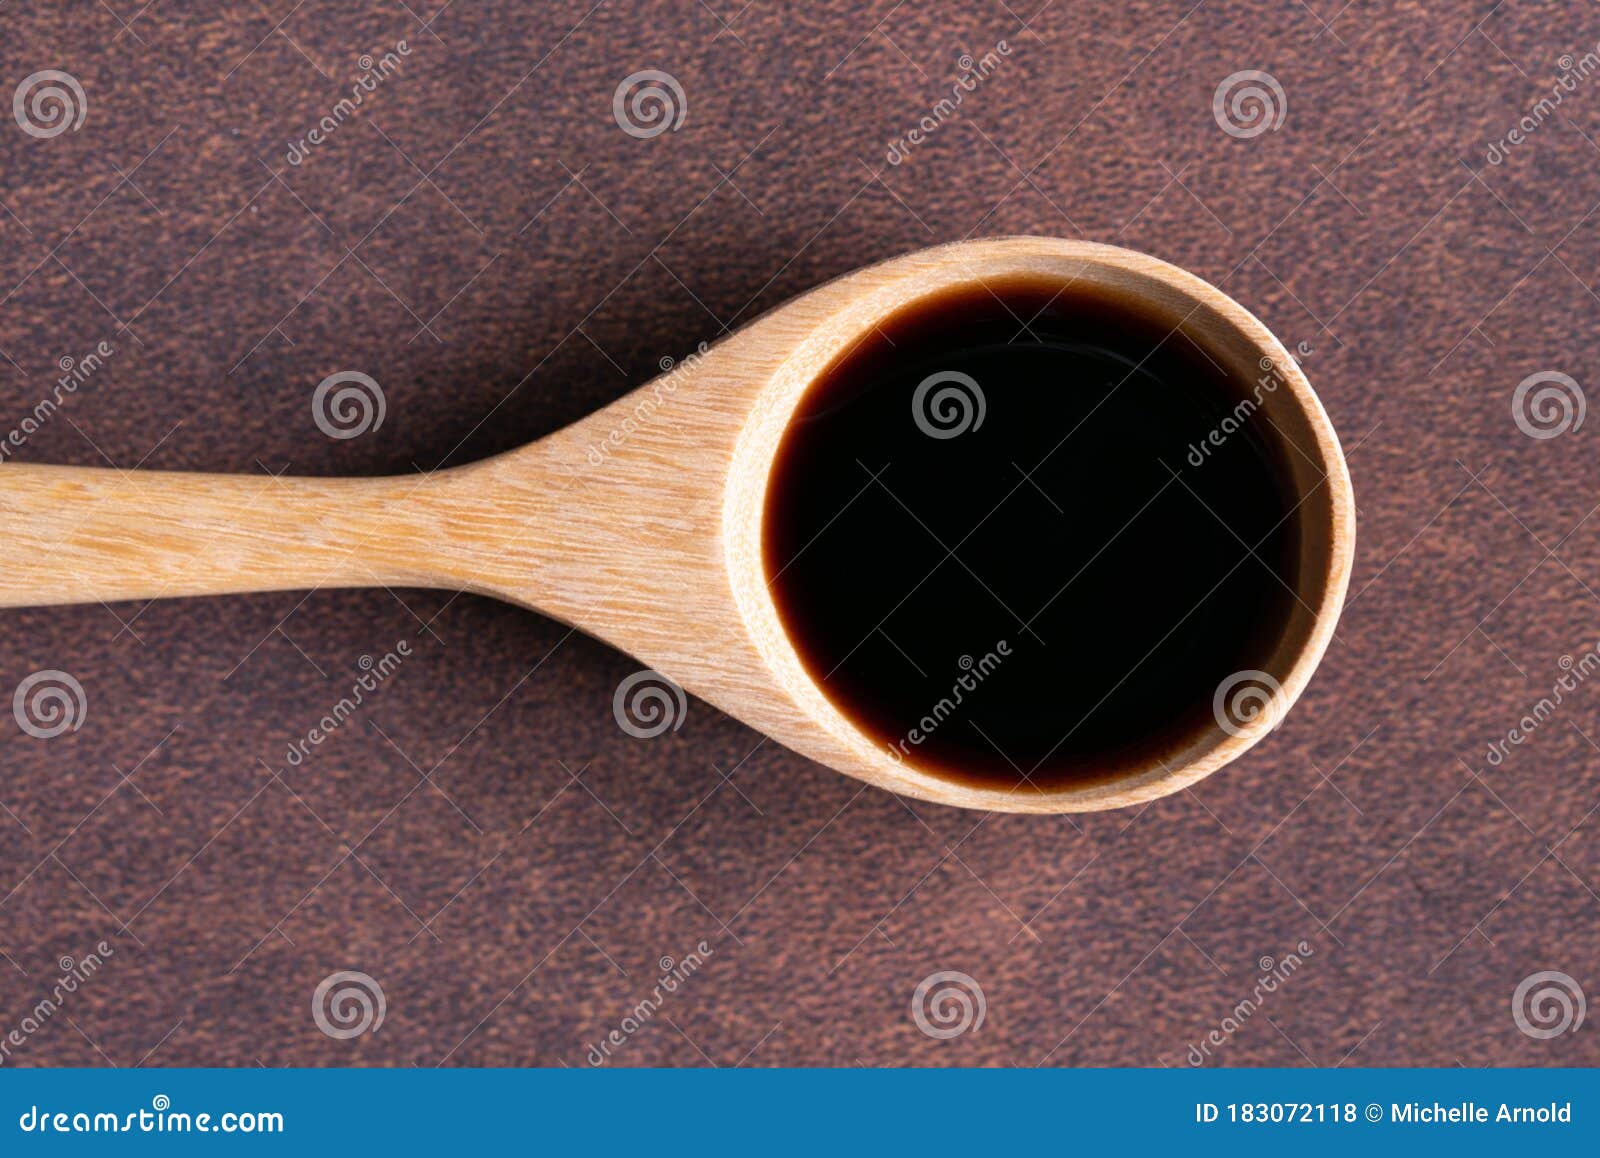 vanilla extract on a wood spoon